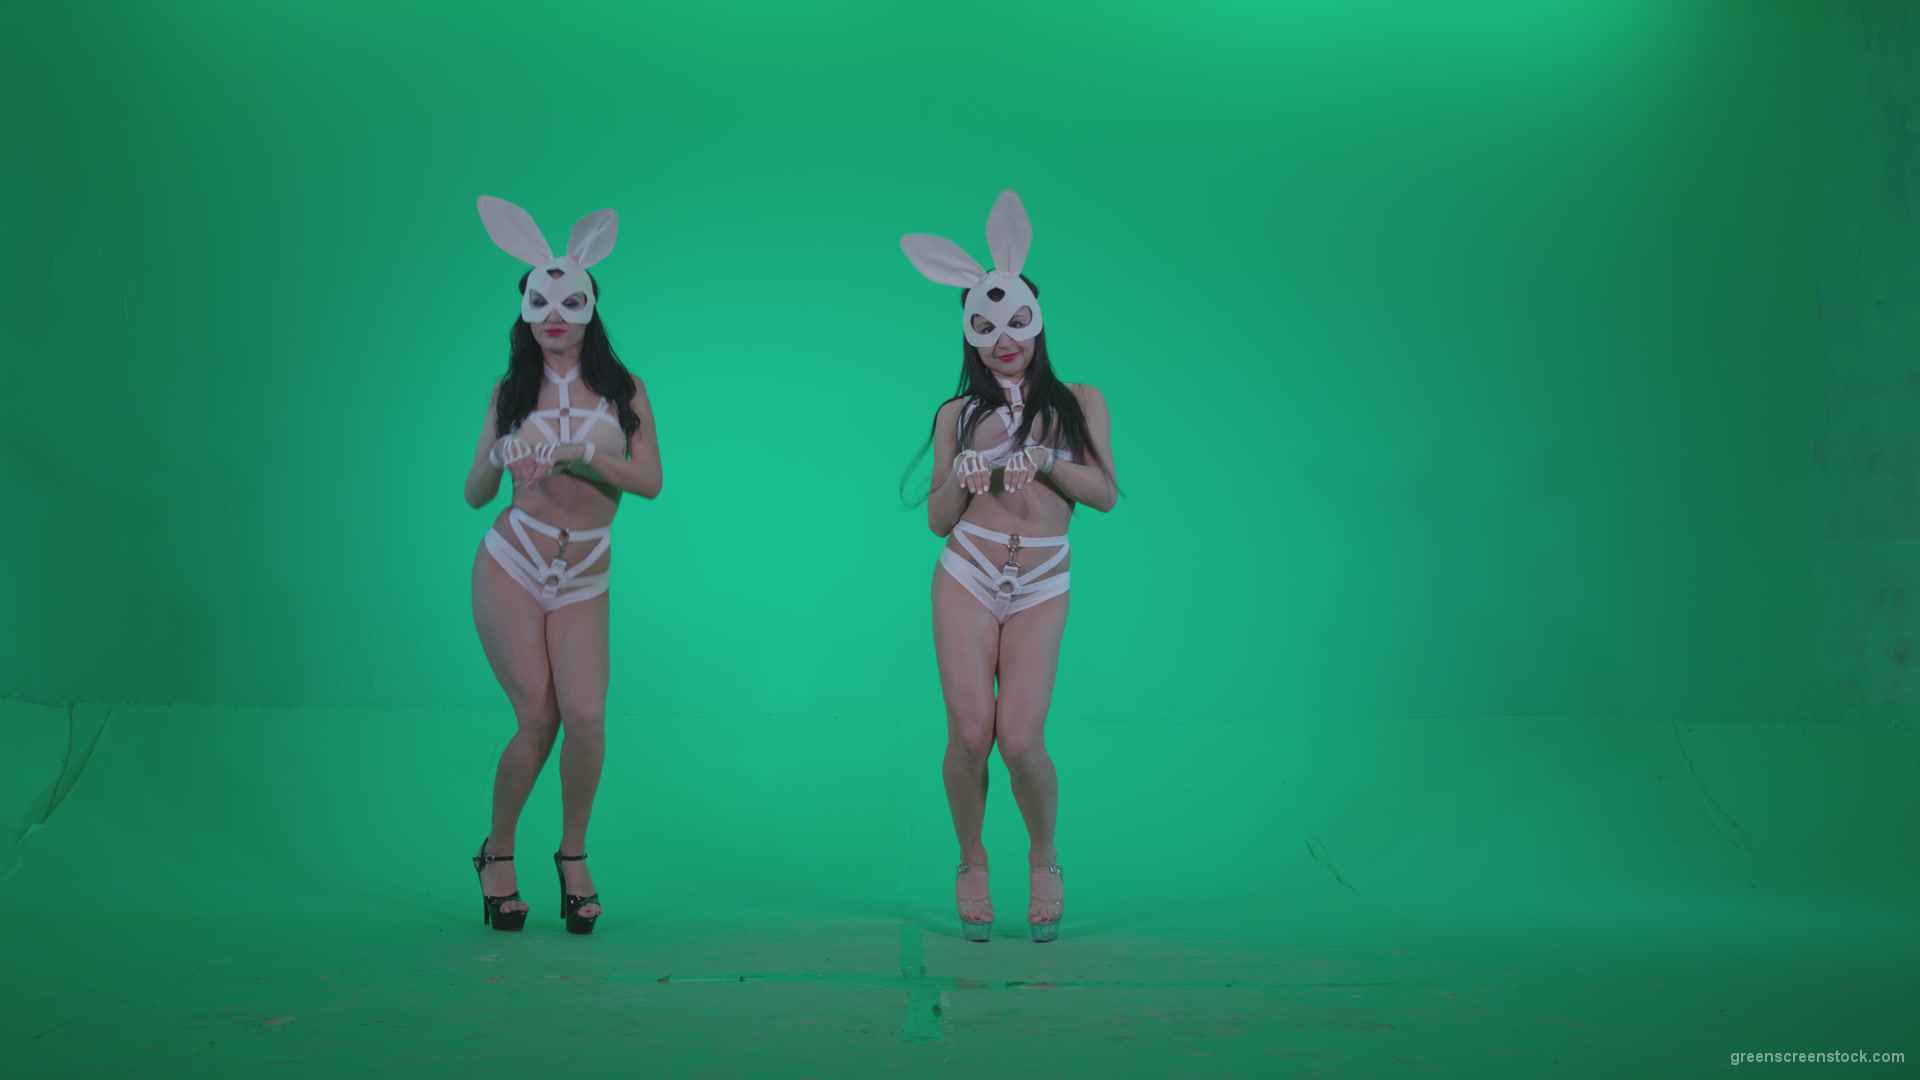 Go-go-Dancer-White-Rabbit-m2-Green-Screen-Video-Footage_008 Green Screen Stock